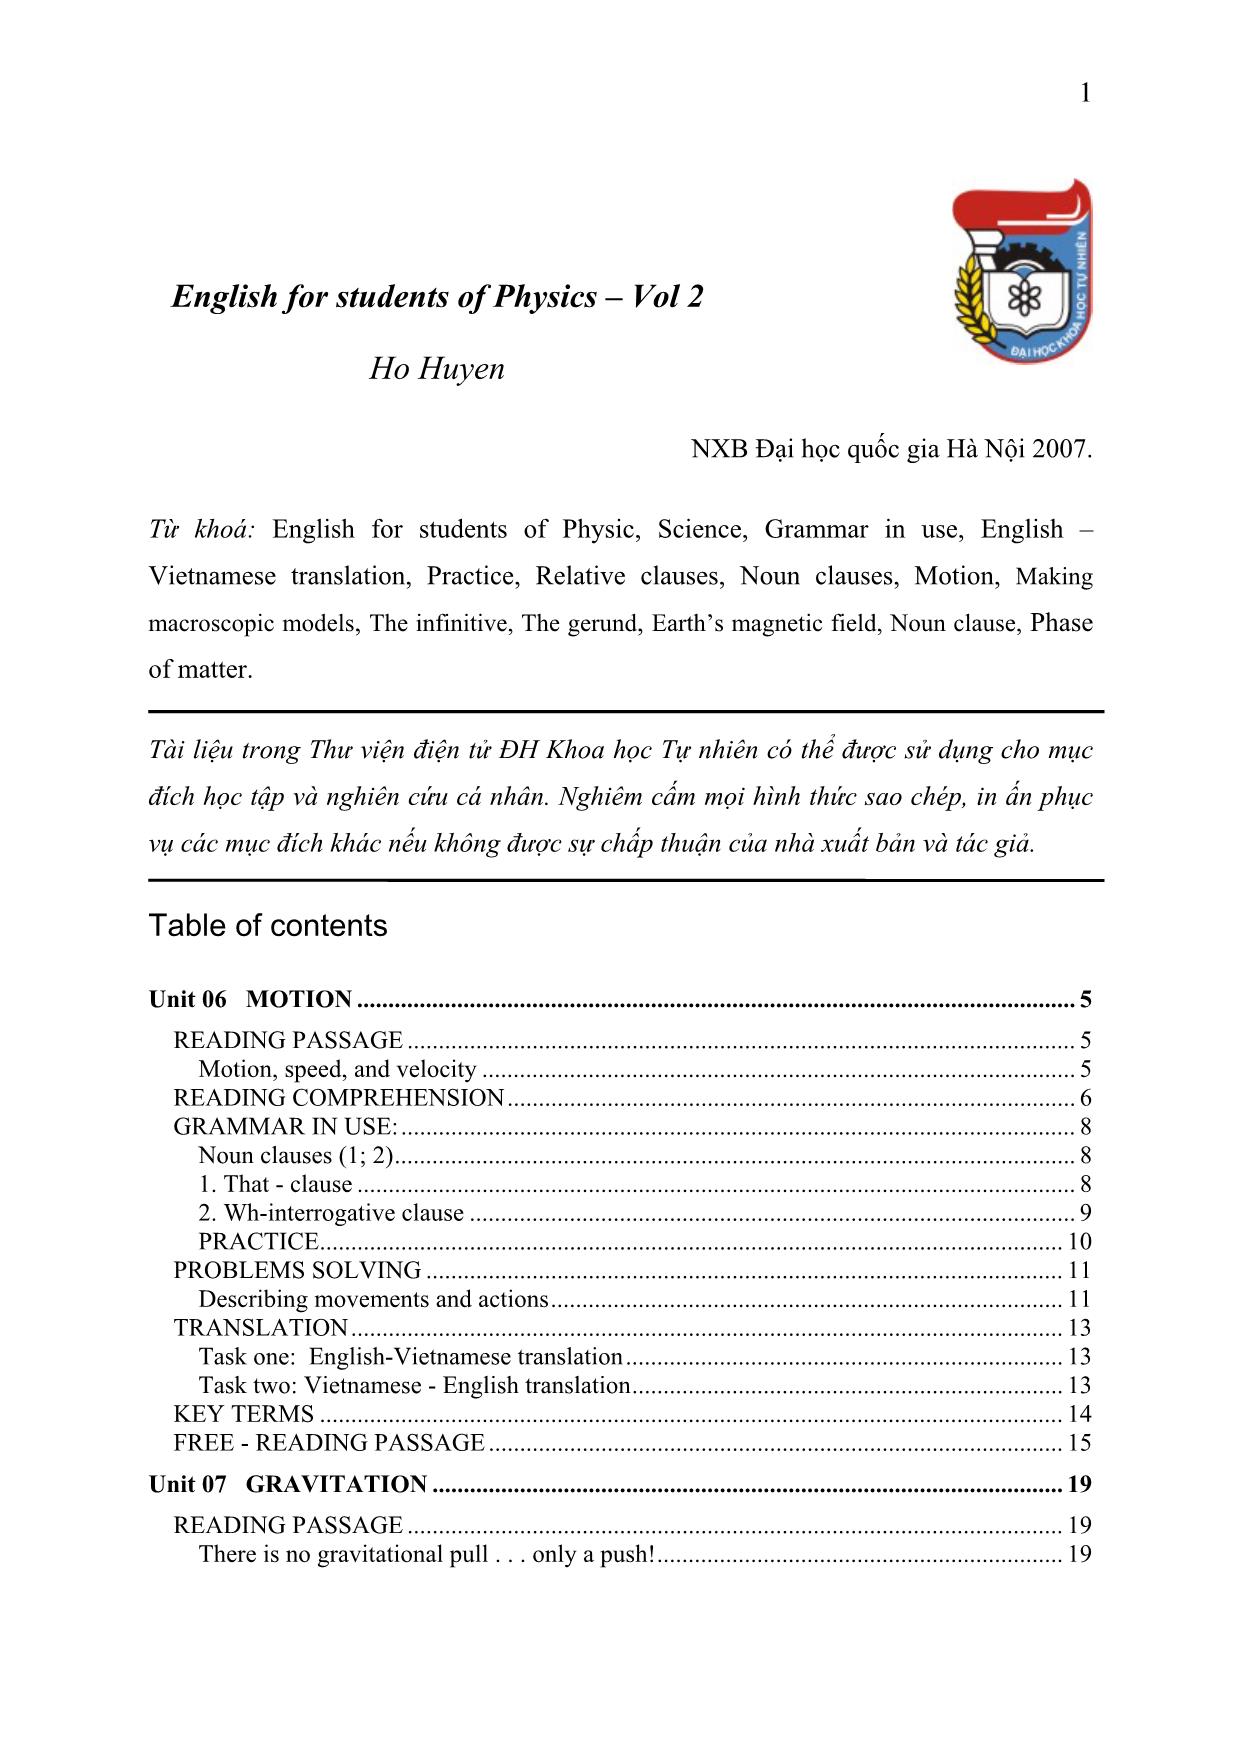 English for students of Physics – Vol 2 trang 1